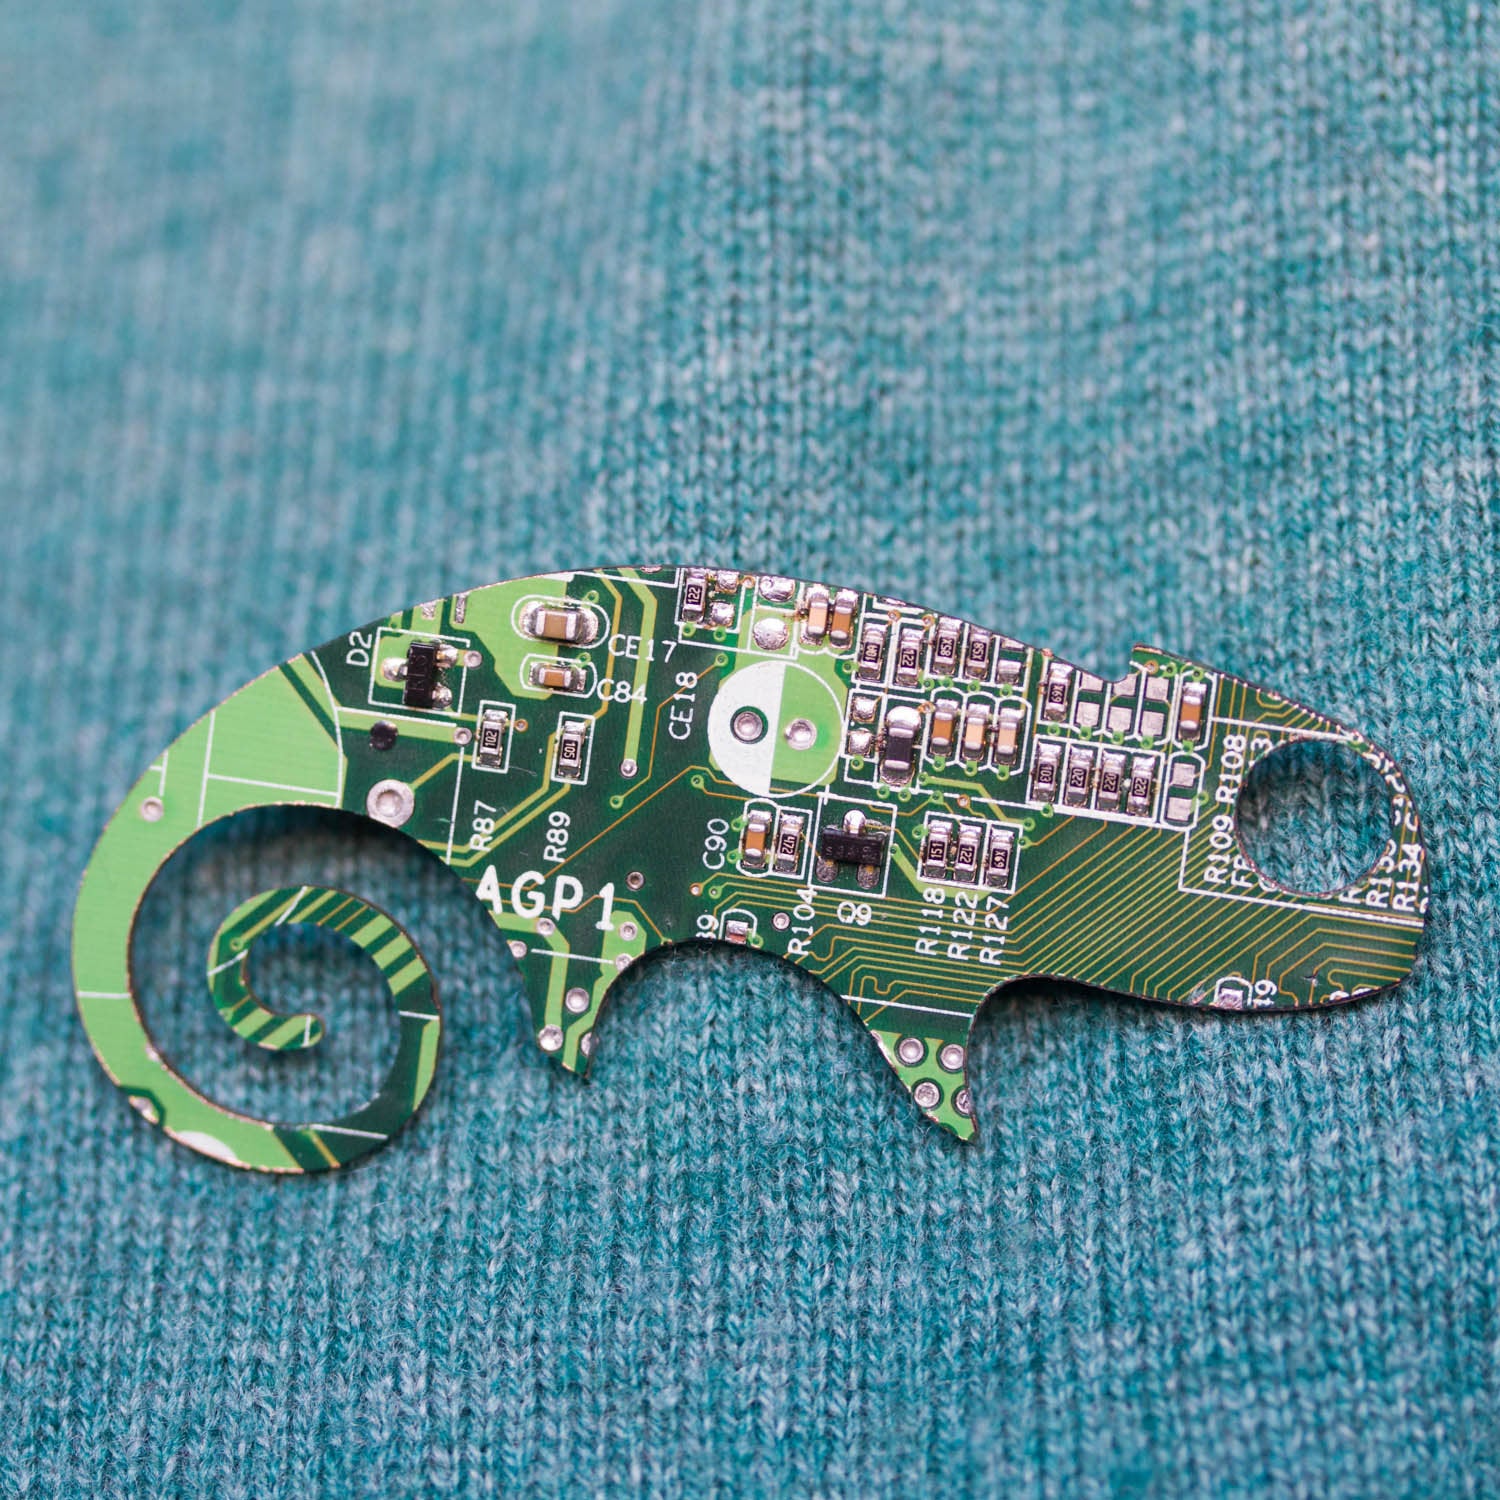 Circuit board Chameleon lizard - brooch, keychain or bag tag